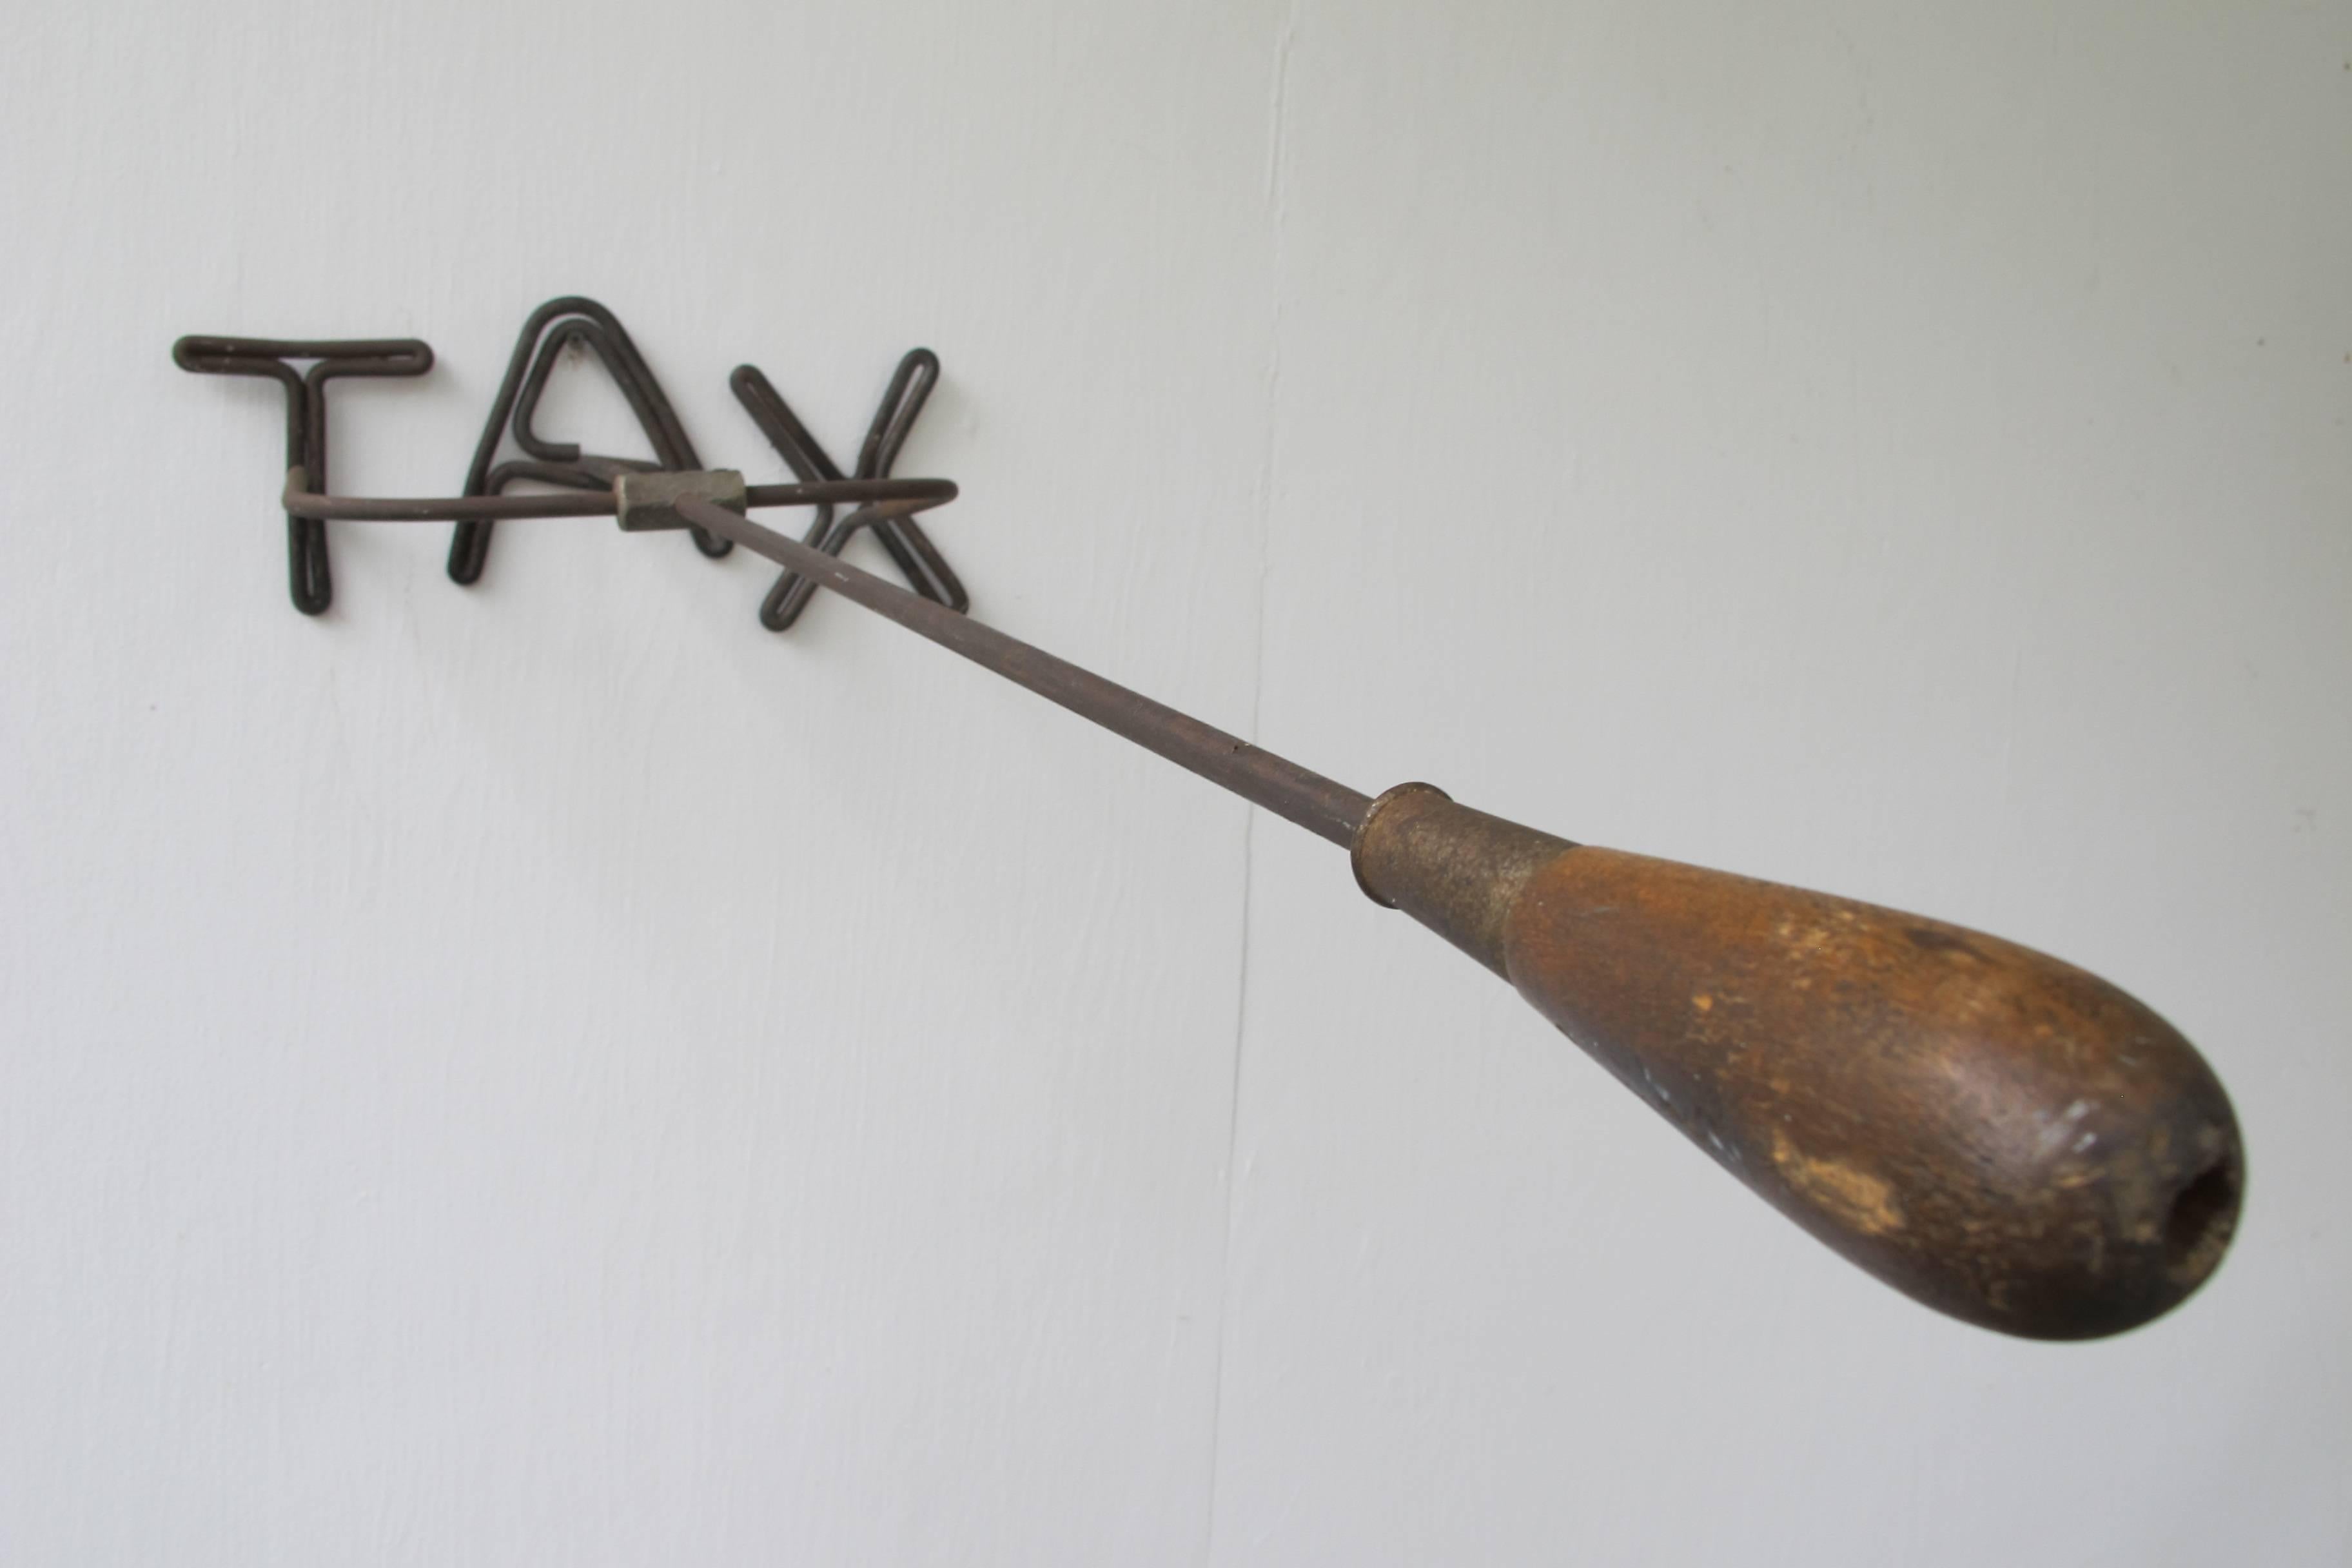 Outsider Art Tax Branding Iron by Edward Nagrodzki For Sale